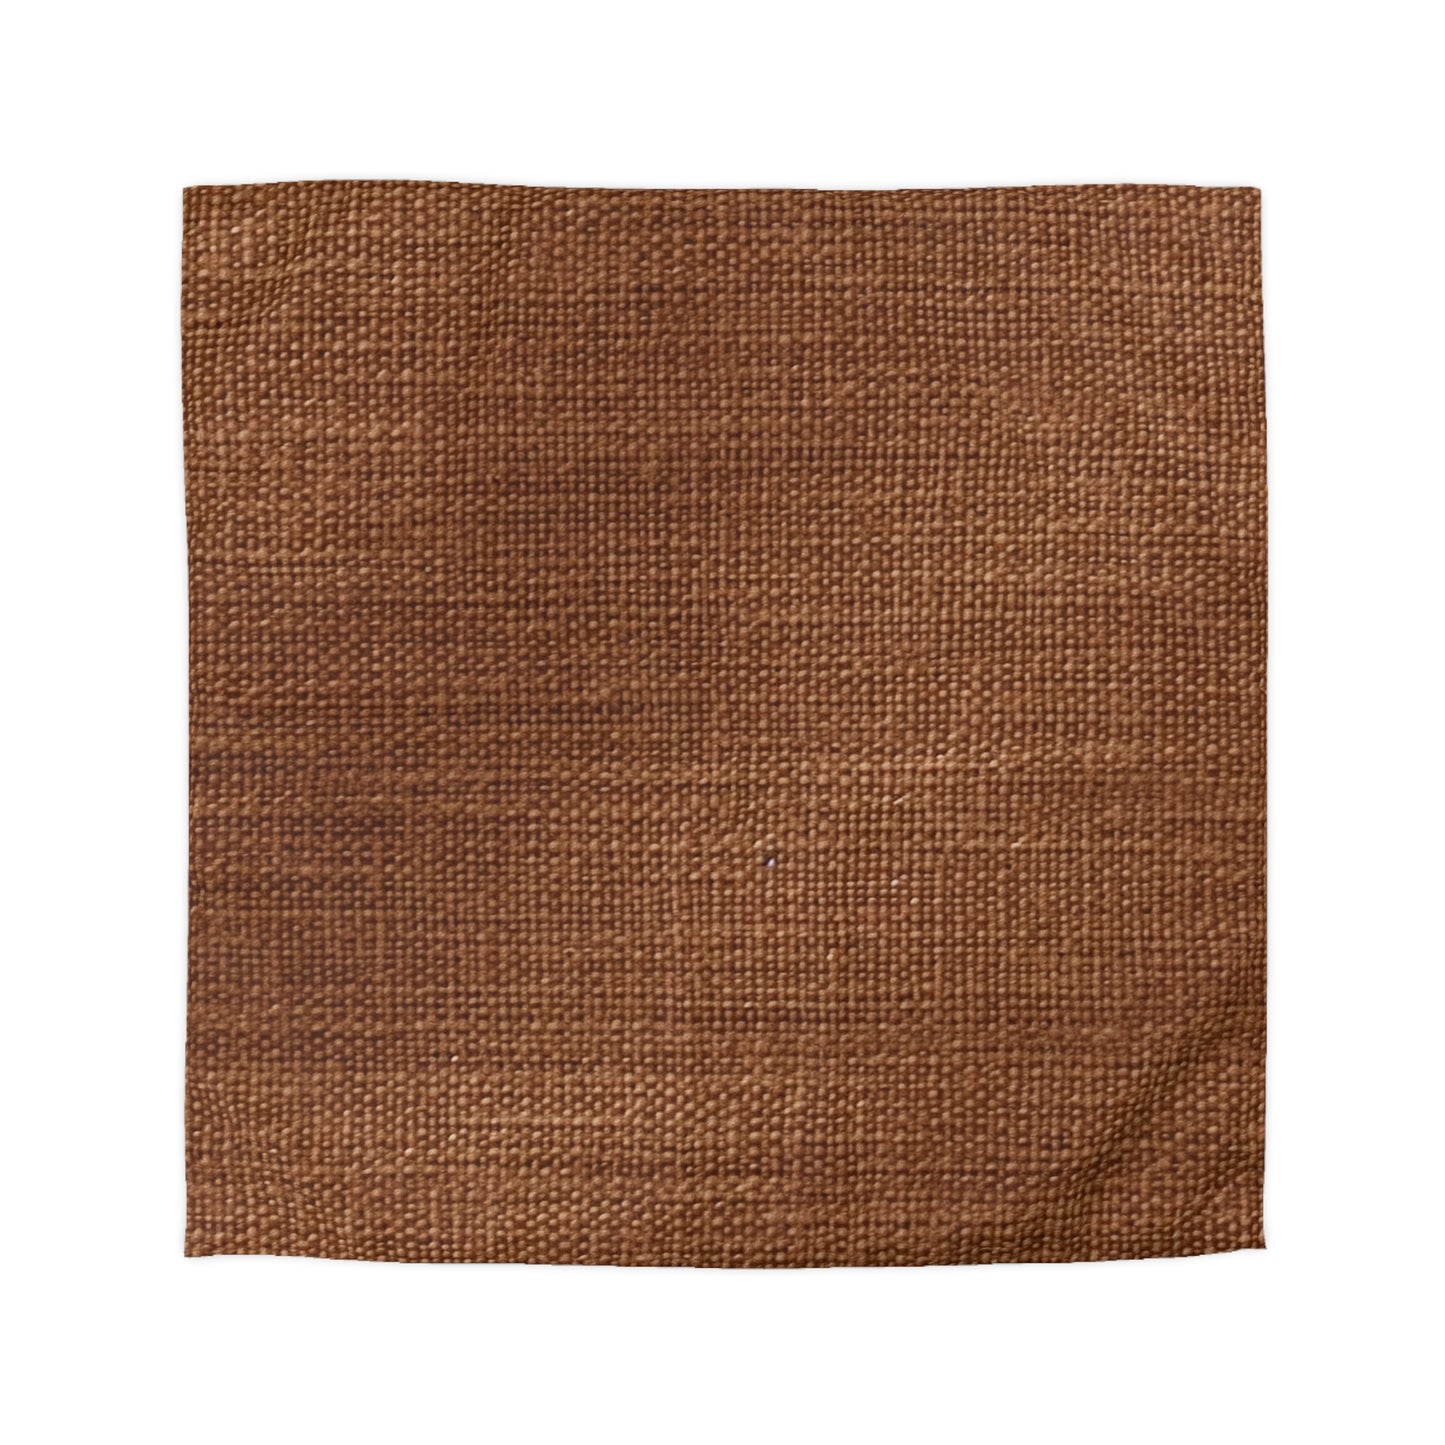 Luxe Dark Brown: Denim-Inspired, Distinctively Textured Fabric - Microfiber Duvet Cover